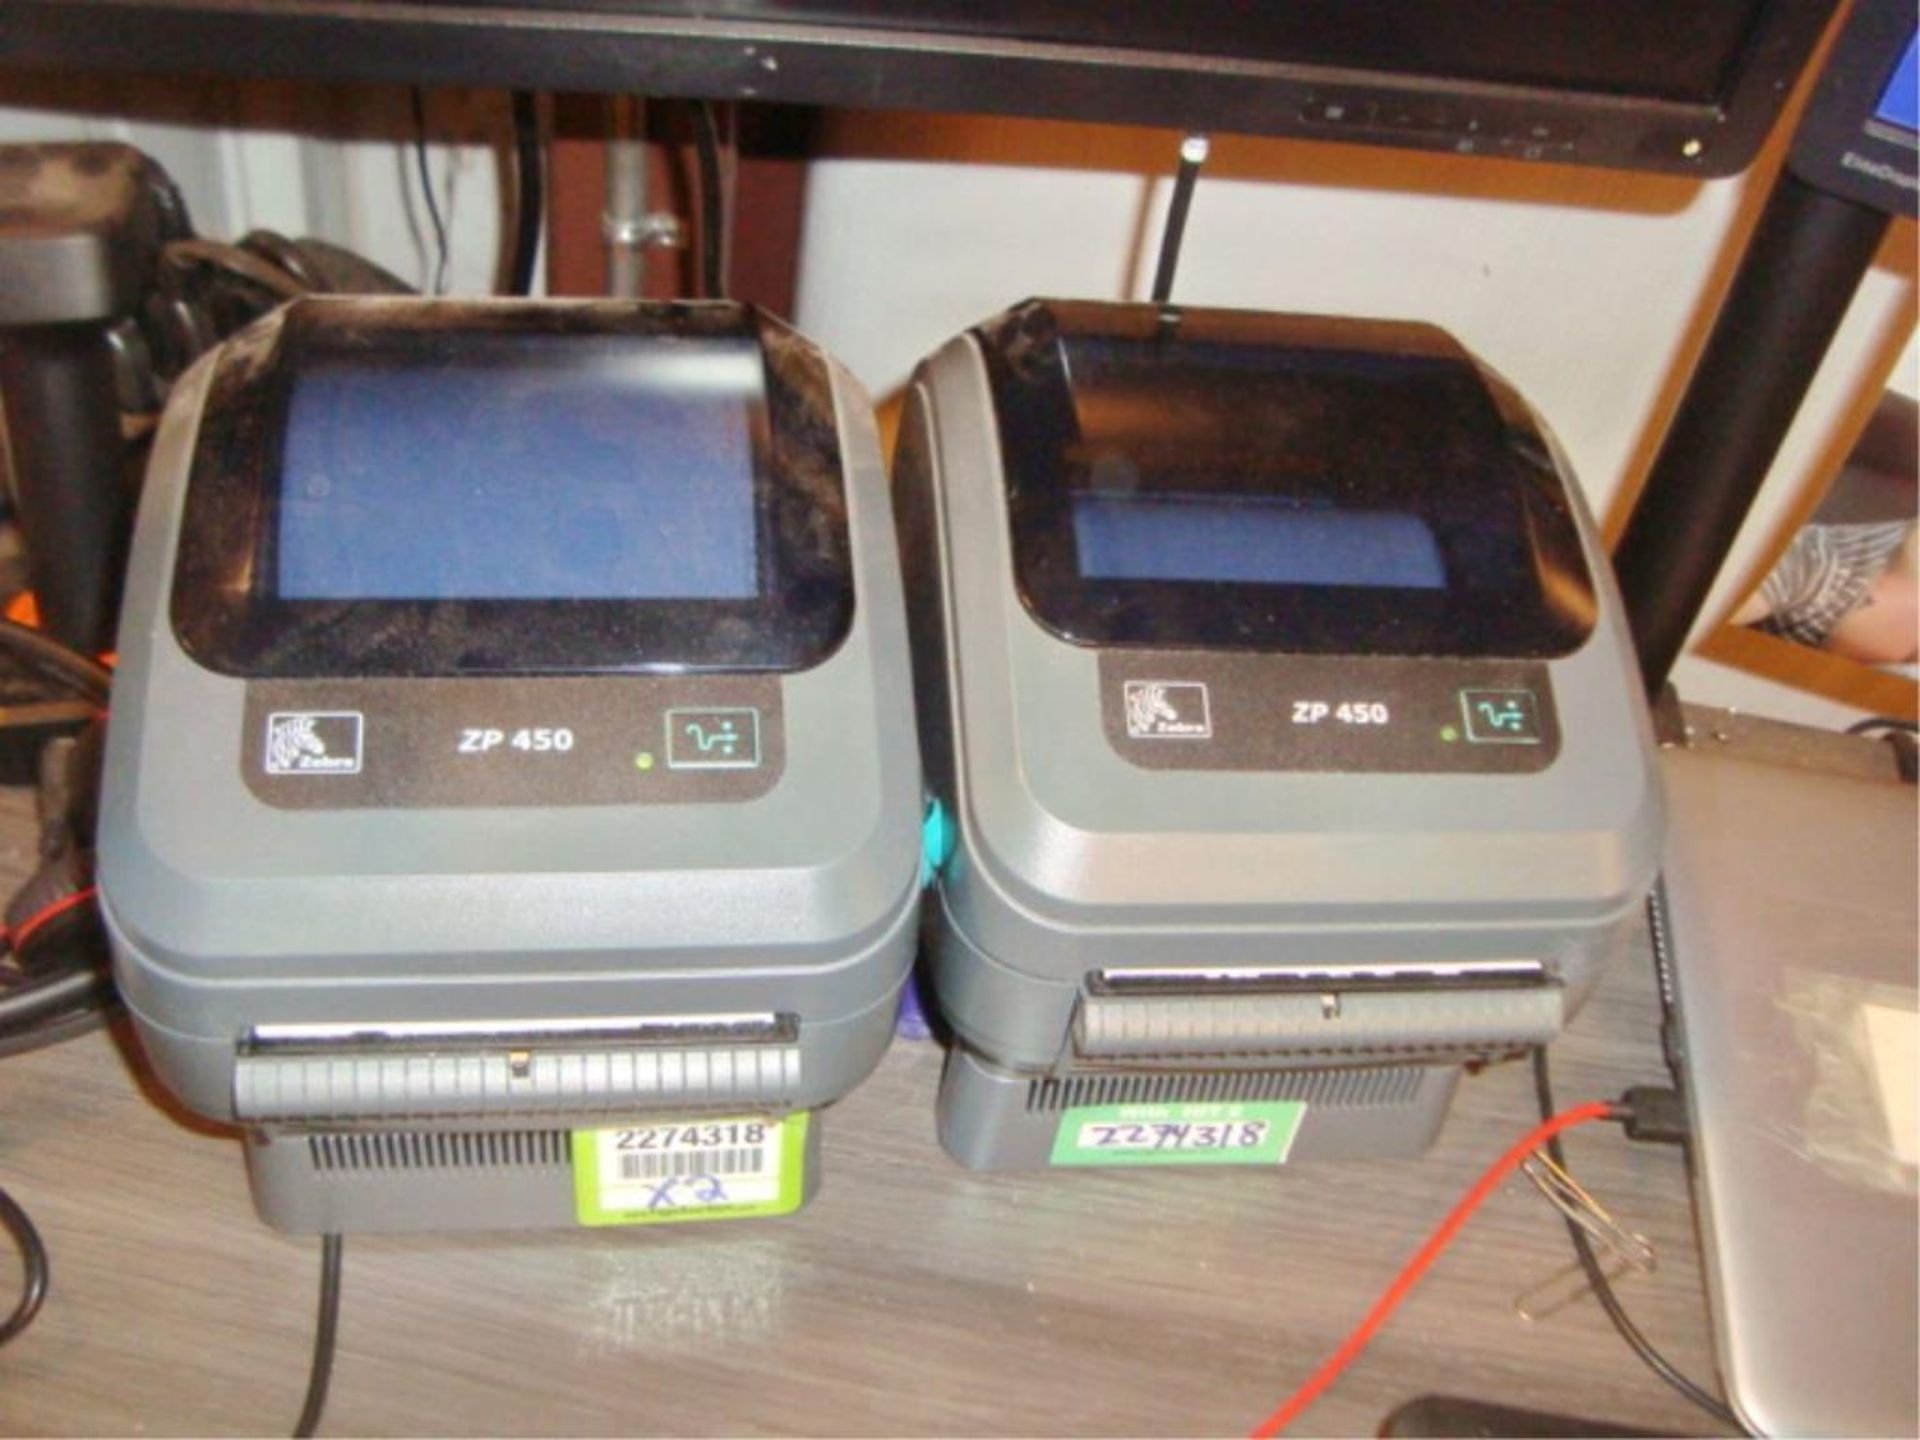 Thermal Transfer Label Printers - Image 3 of 3